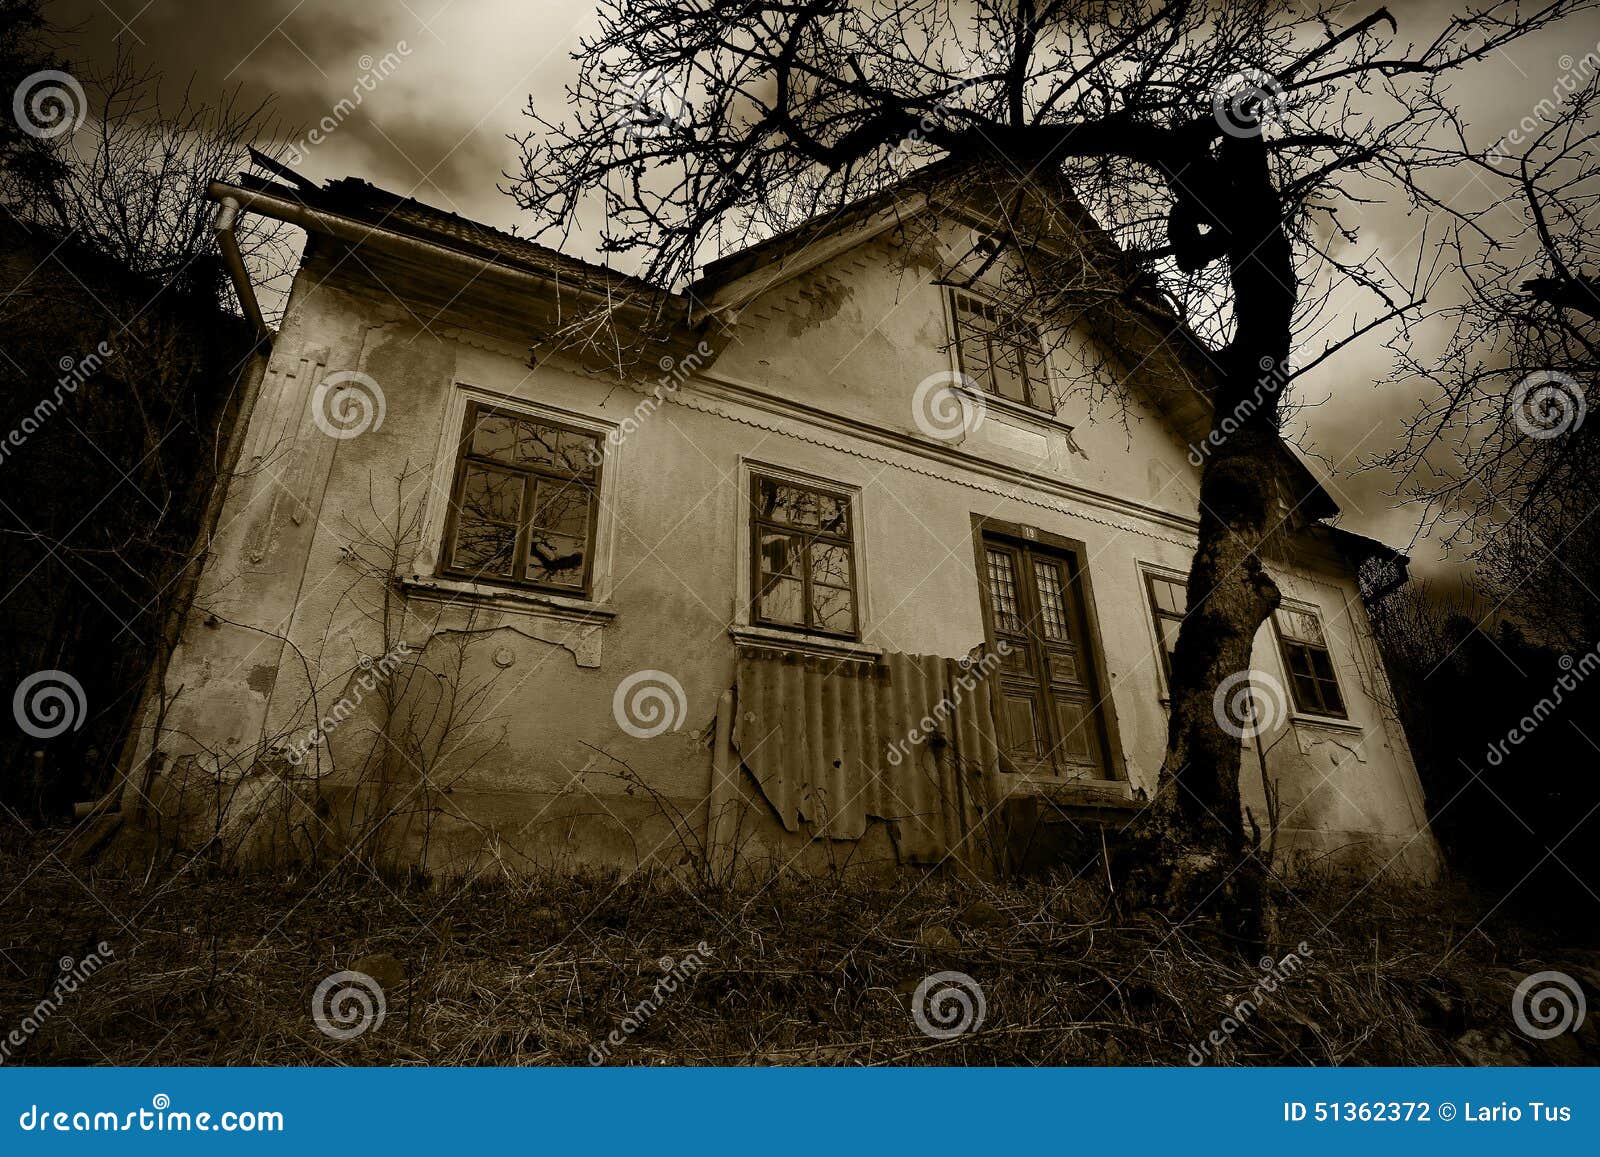 Horror Background - the Abandoned Old Creepy House Stock Photo - Image of  drama, poster: 51362372